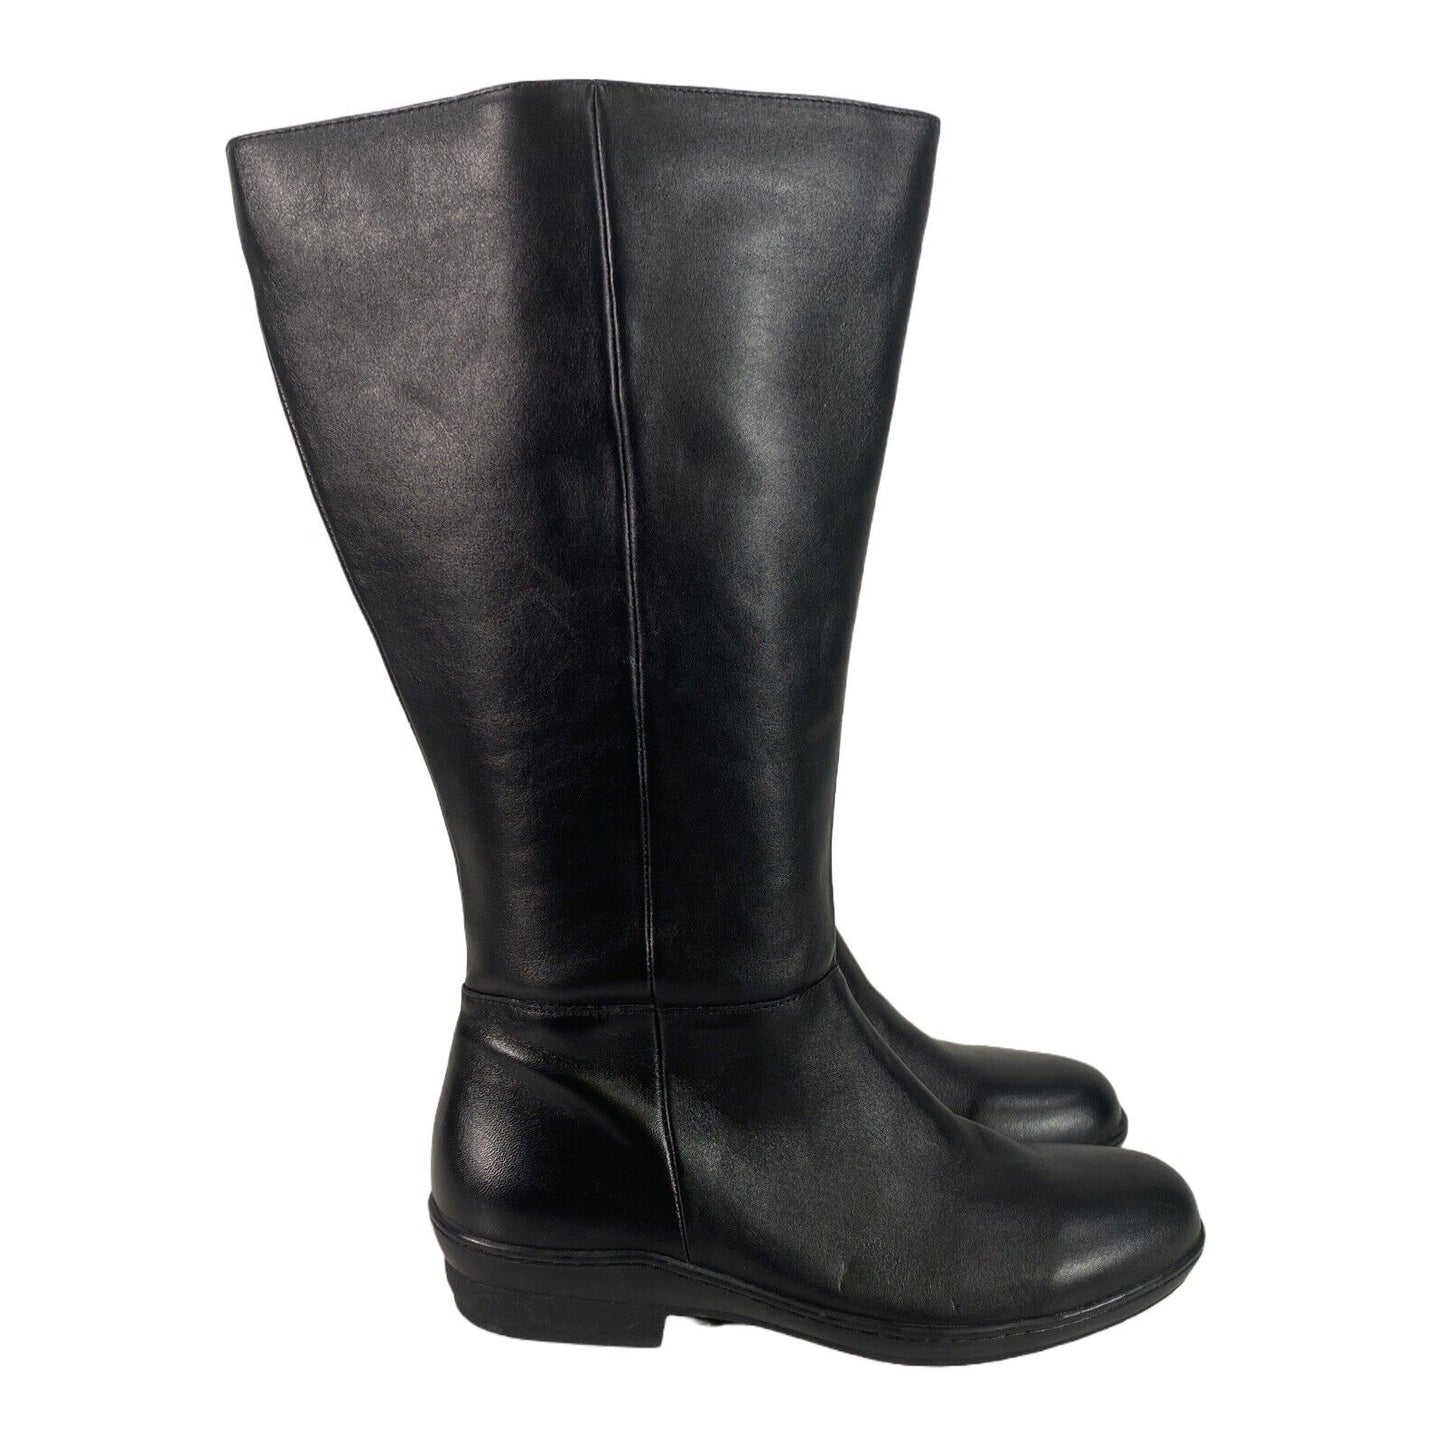 David Tate Women's Black Leather Mid Calf Full Zip Riding Boots - 7.5M